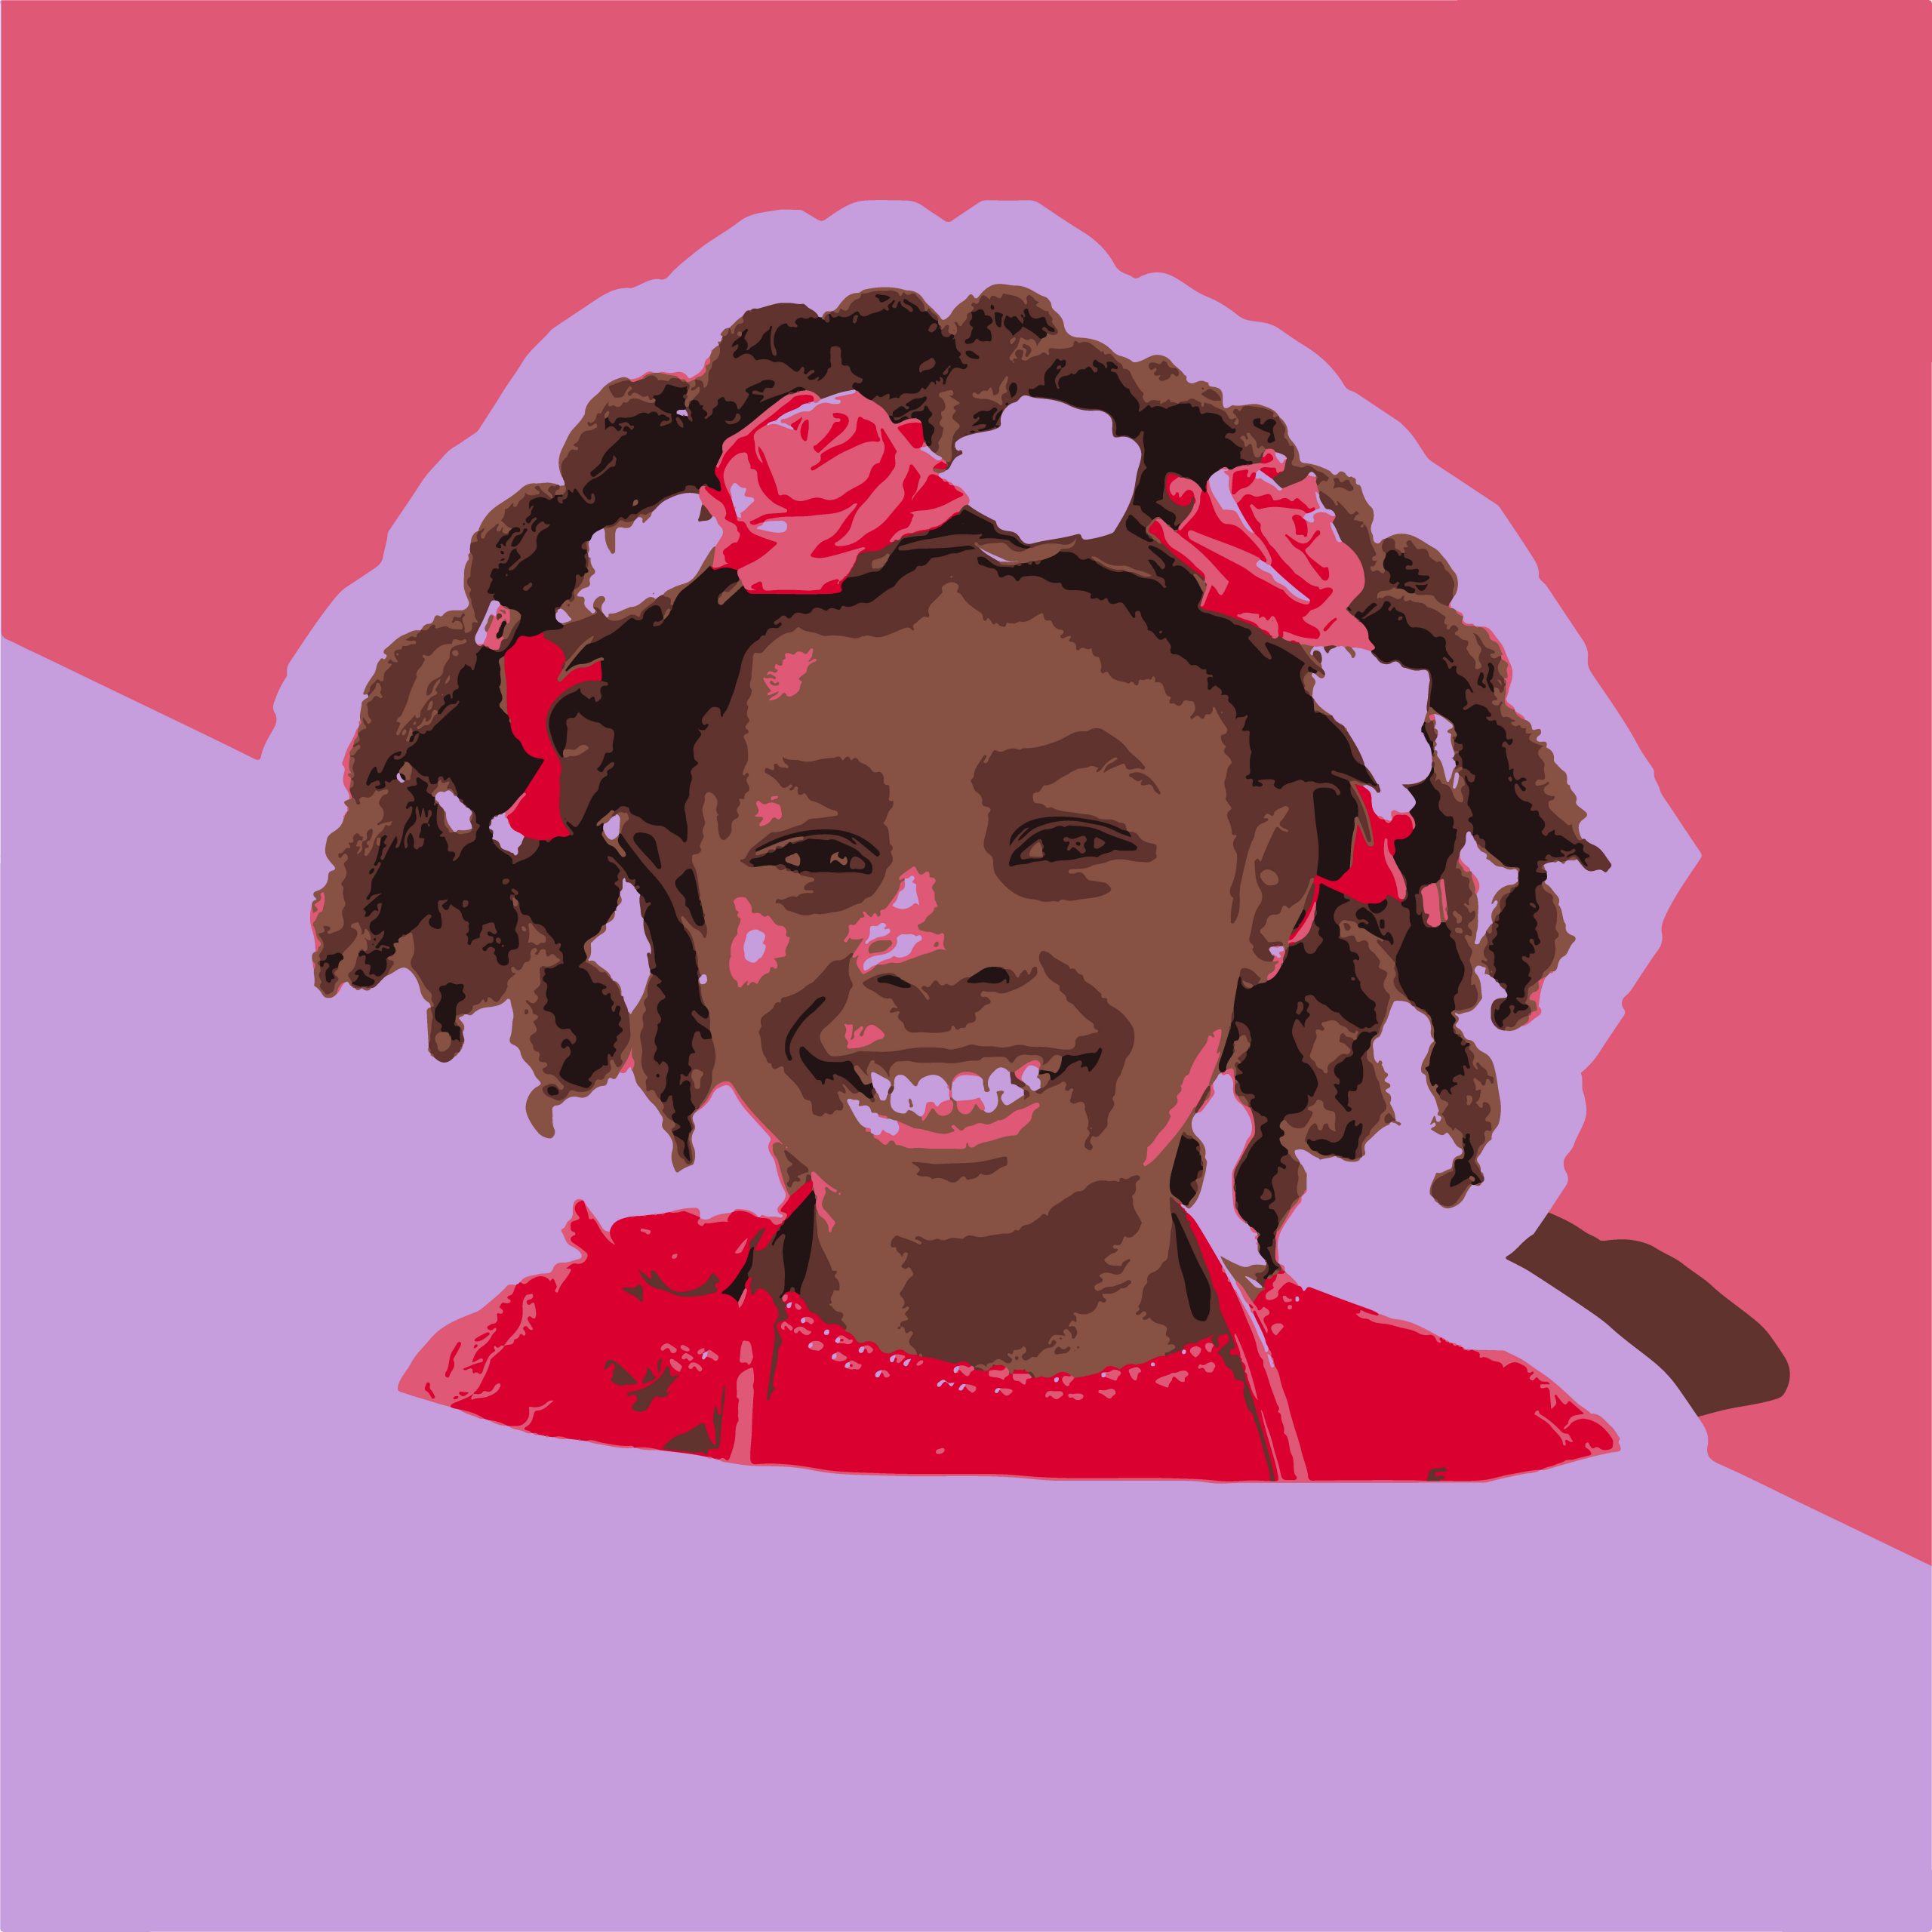 Illustration of a happy child